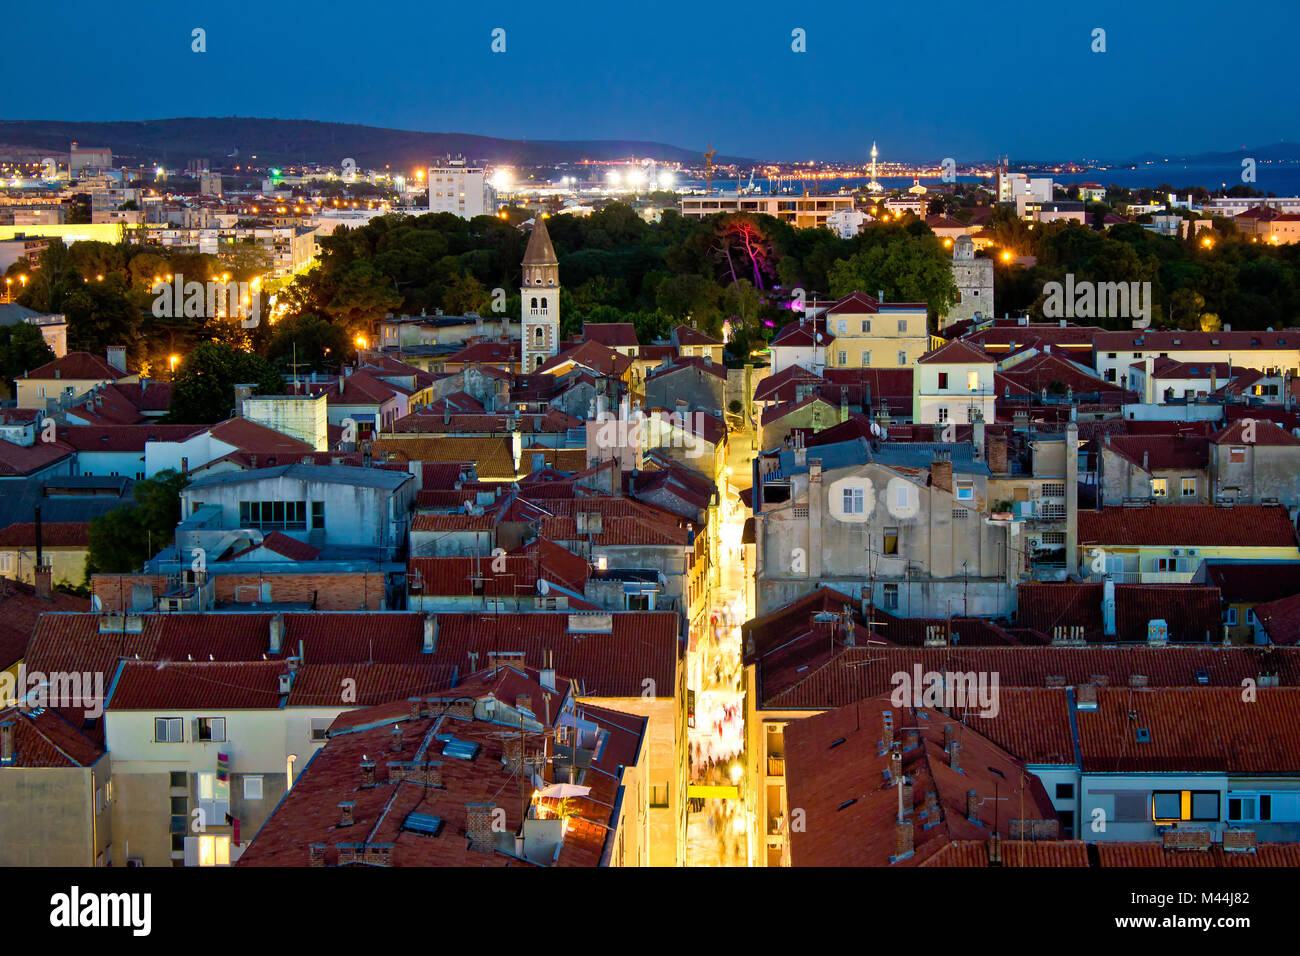 Zara penisola calle larga panorama di sera Foto stock - Alamy